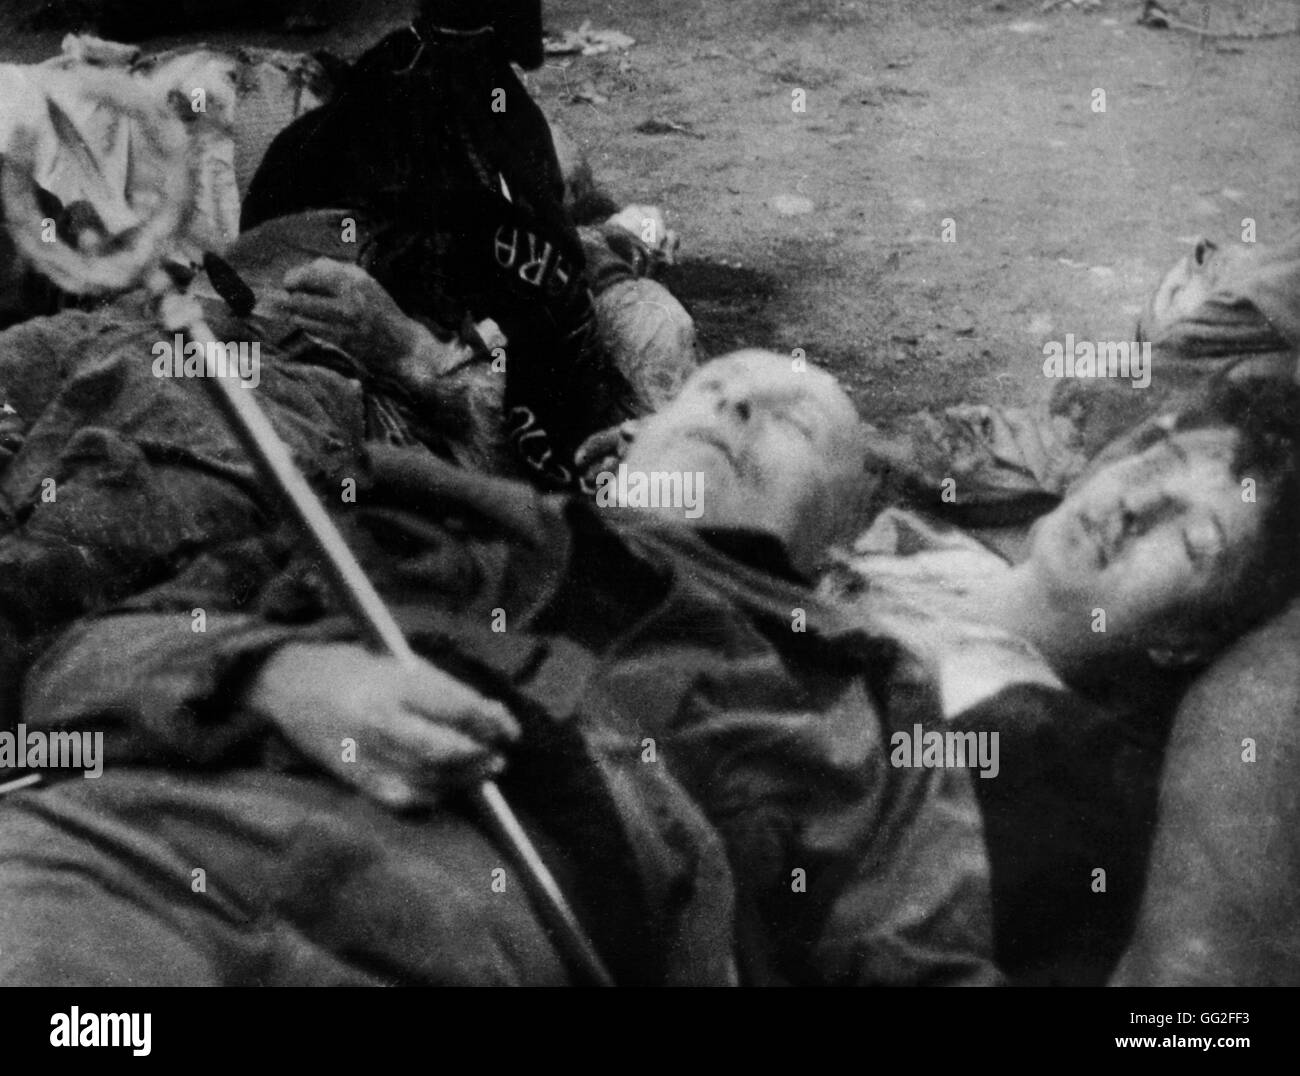 Milano. Piazza Loretto. The bodies of Benito Mussolini and his mistress Petacci April 28, 1945 Italy Washington. National Archives Stock Photo